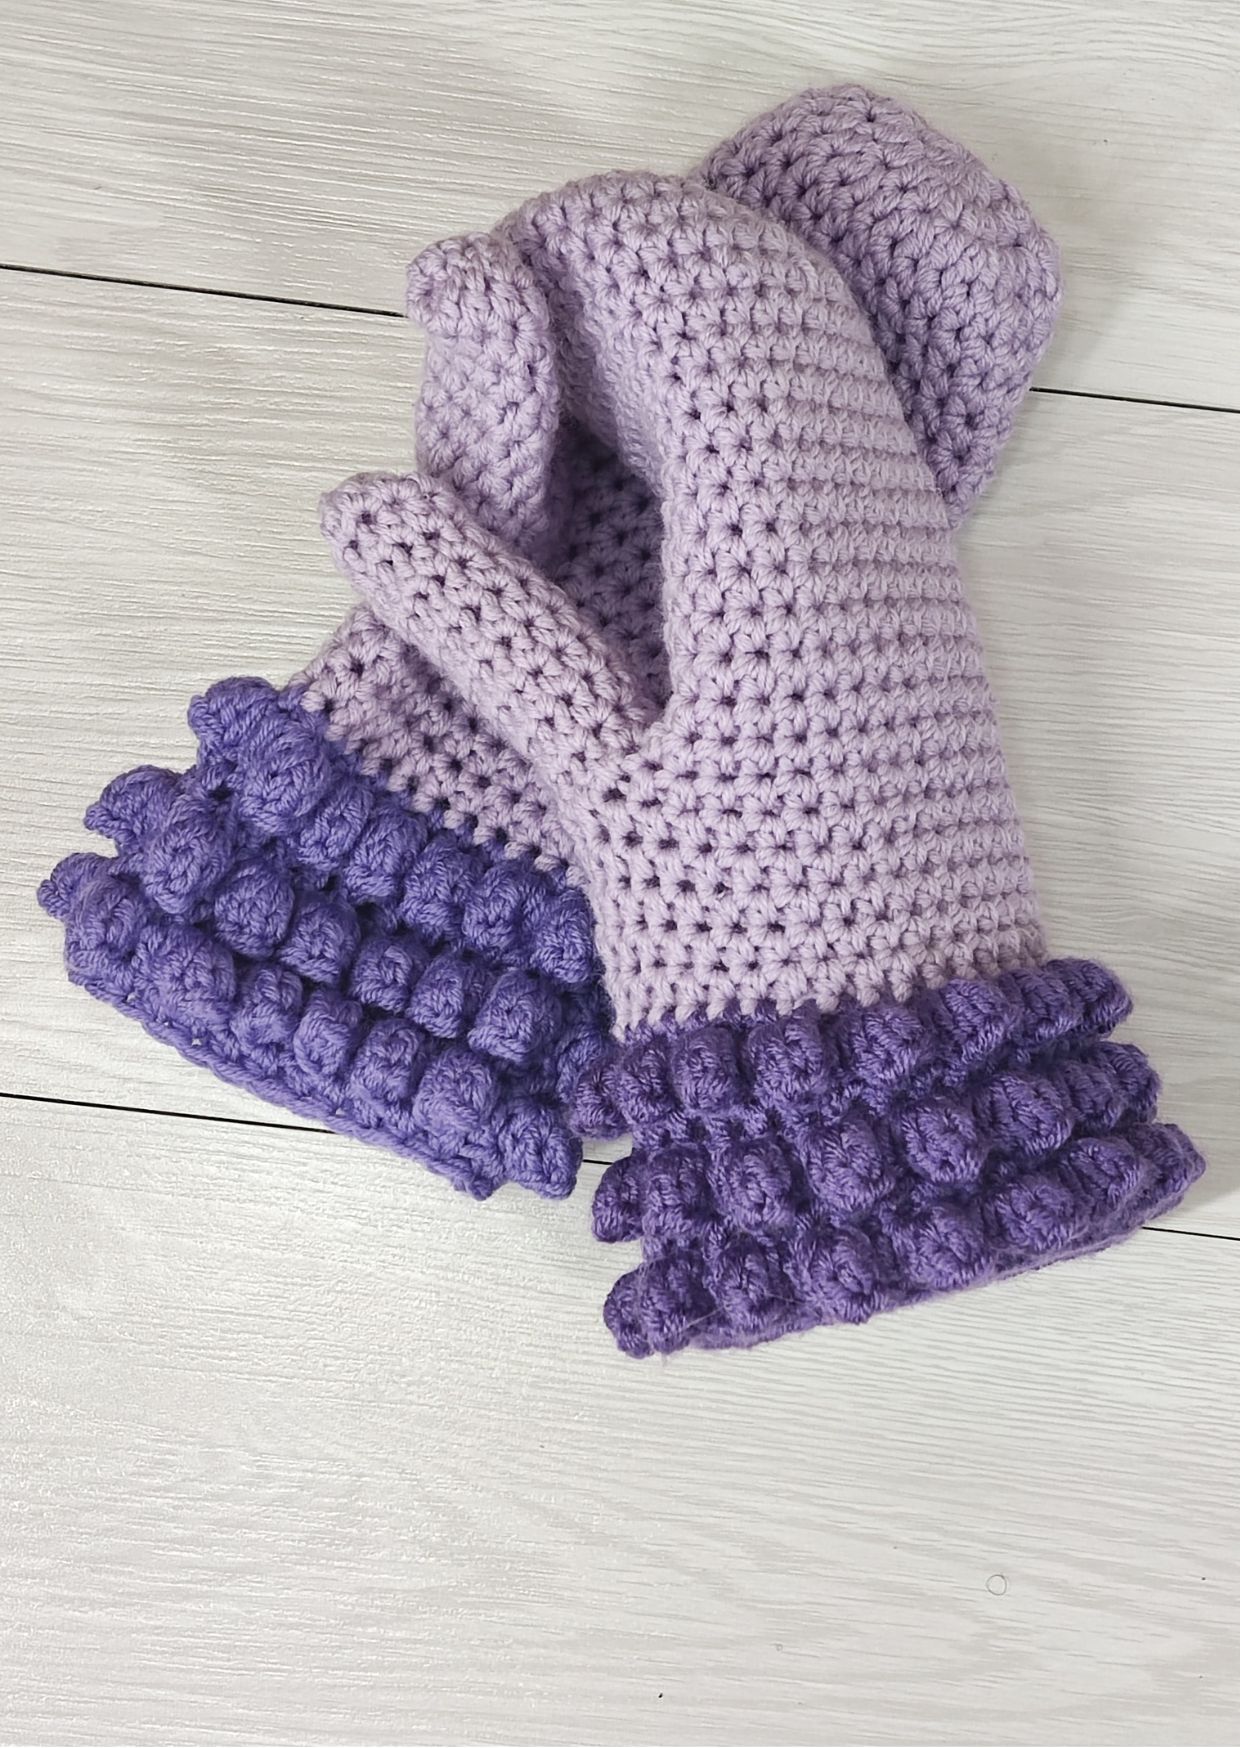 Crochet mittens free pattern